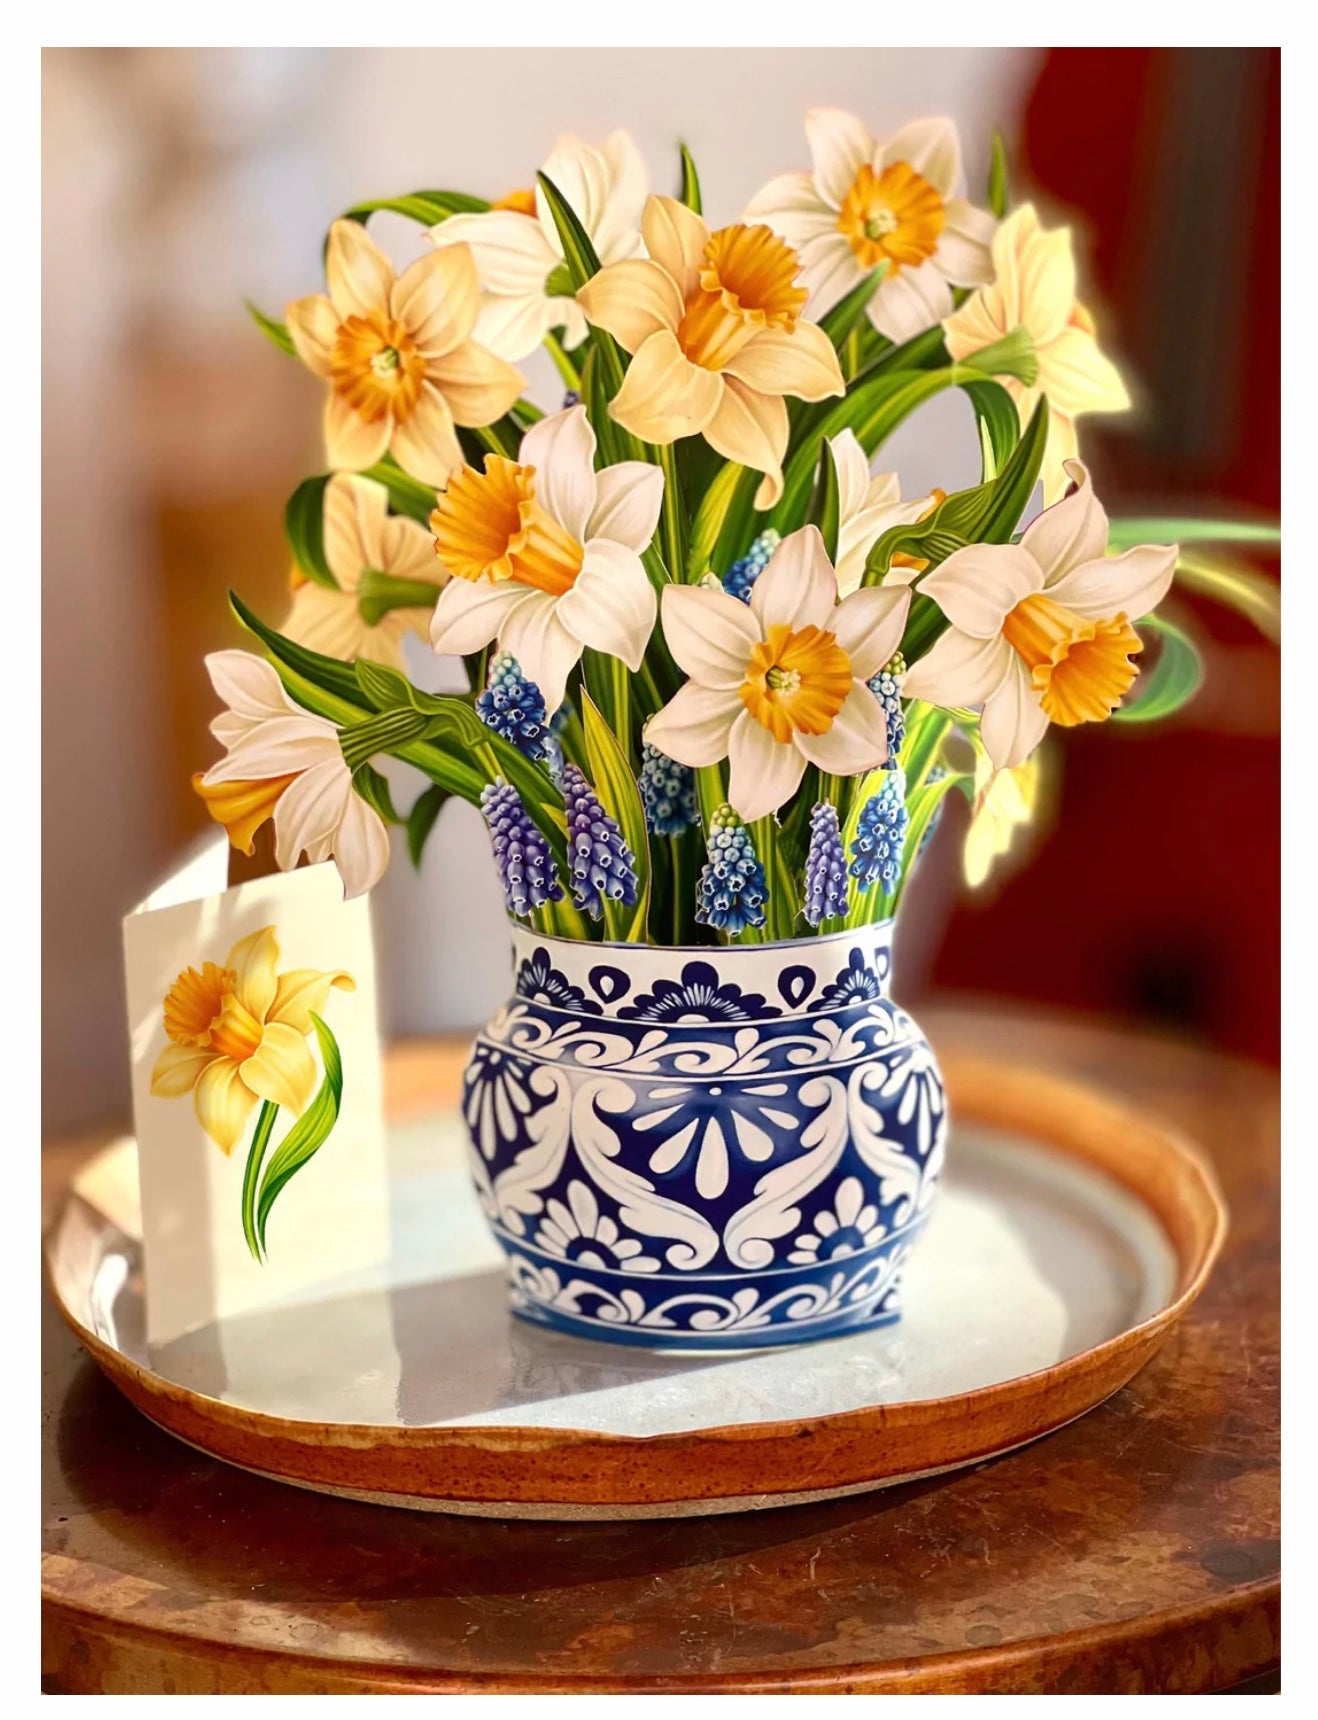 French Poppies FreshCut Paper Bouquet - Lark - A Modern Marketplace